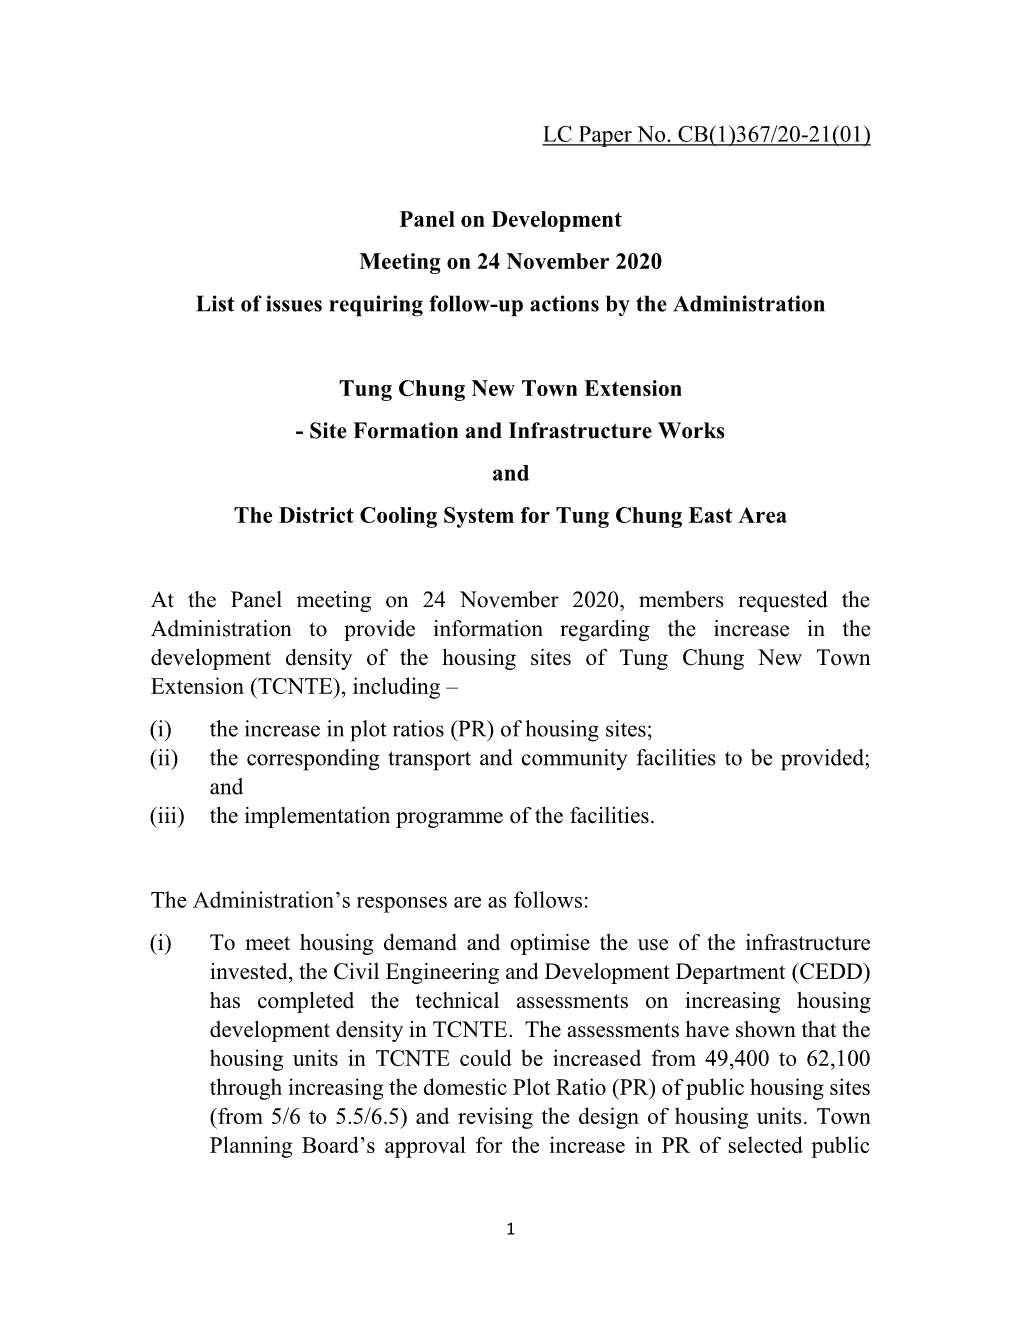 LC Paper No. CB(1)367/20-21(01) Panel on Development Meeting On